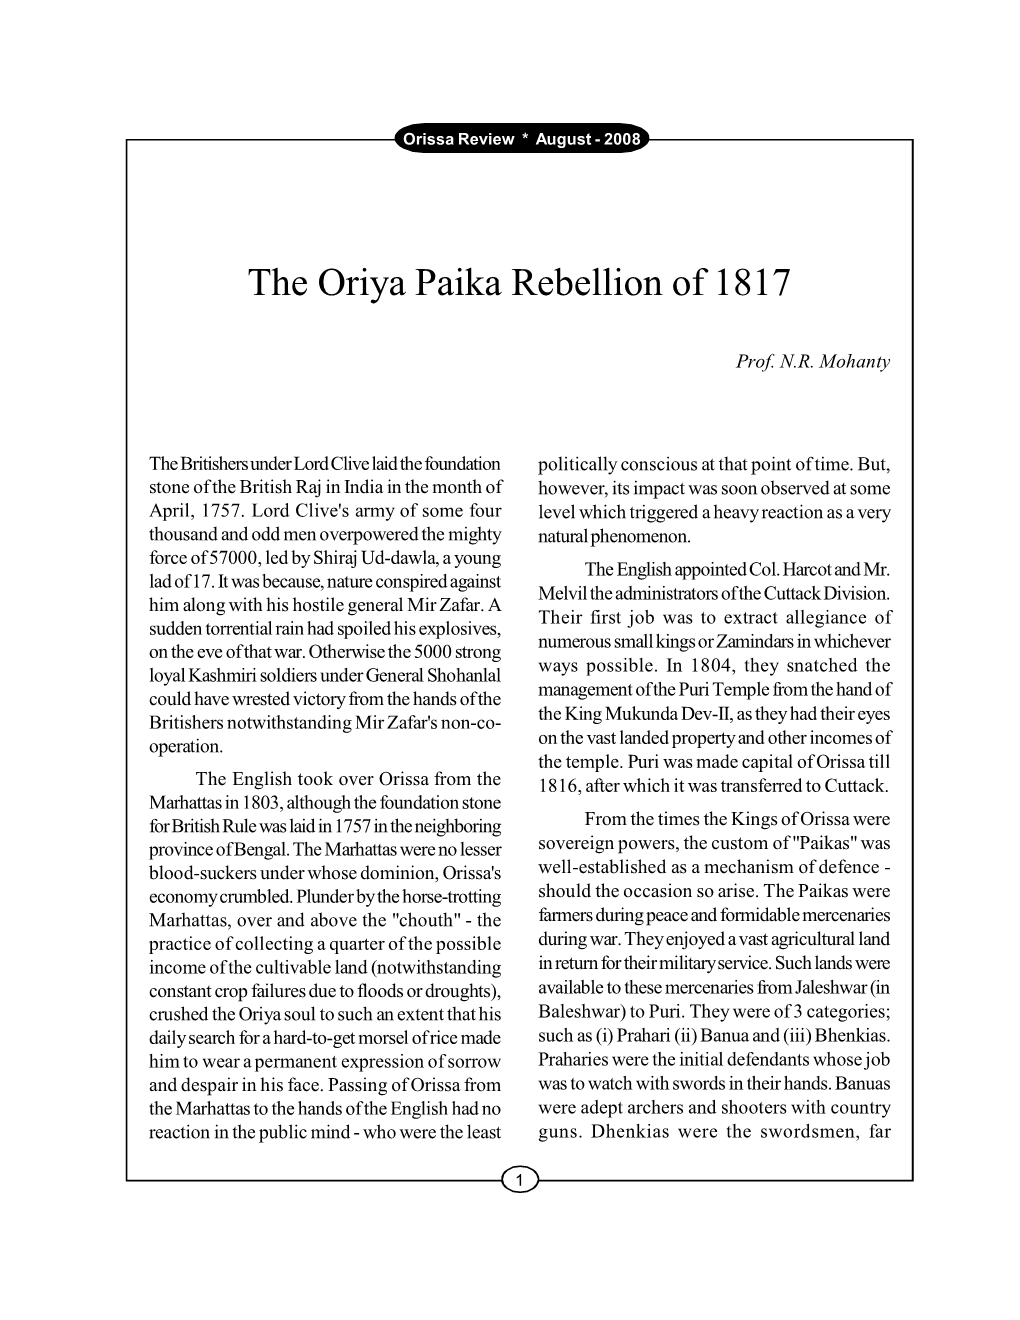 The Oriya Paika Rebellion of 1817